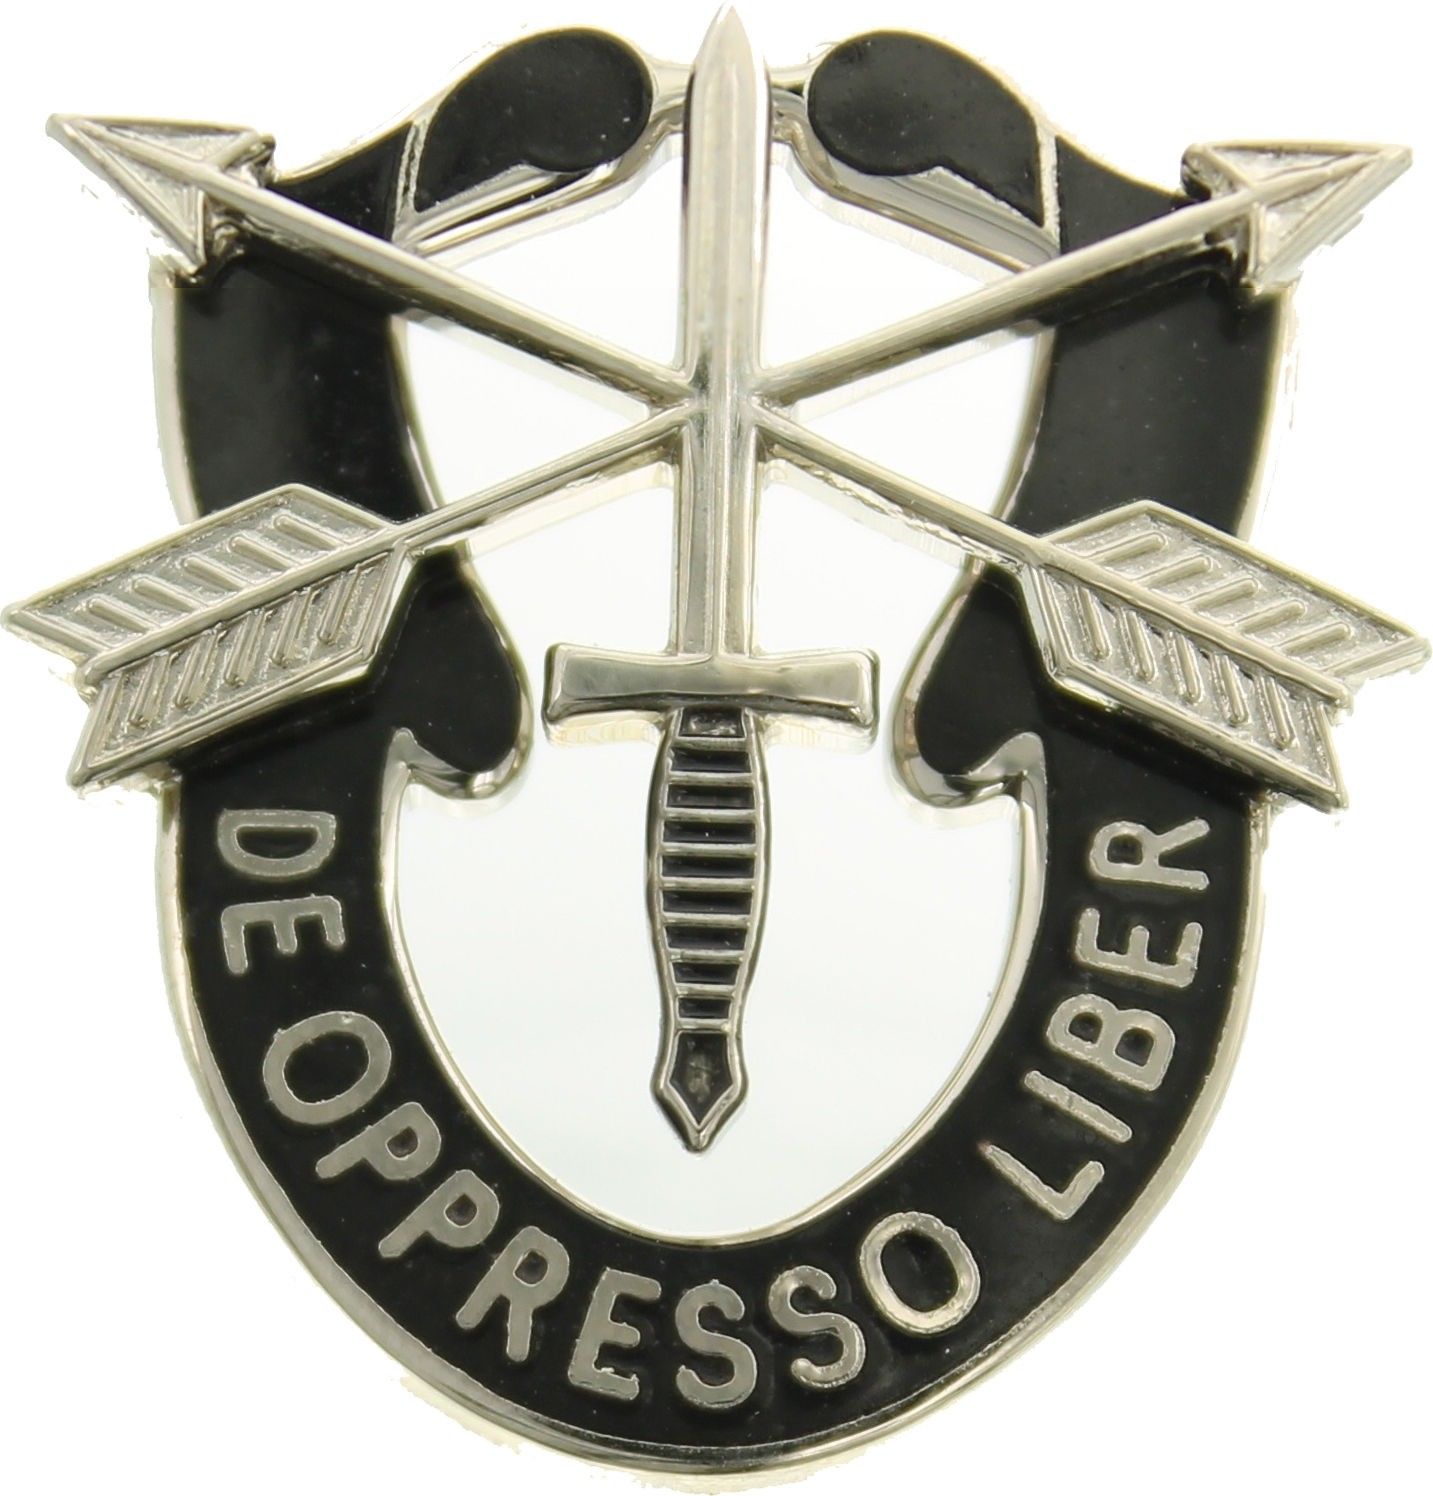 US Special Forces De Oppresso Liber Sword & Arrow Clutch Back Pin